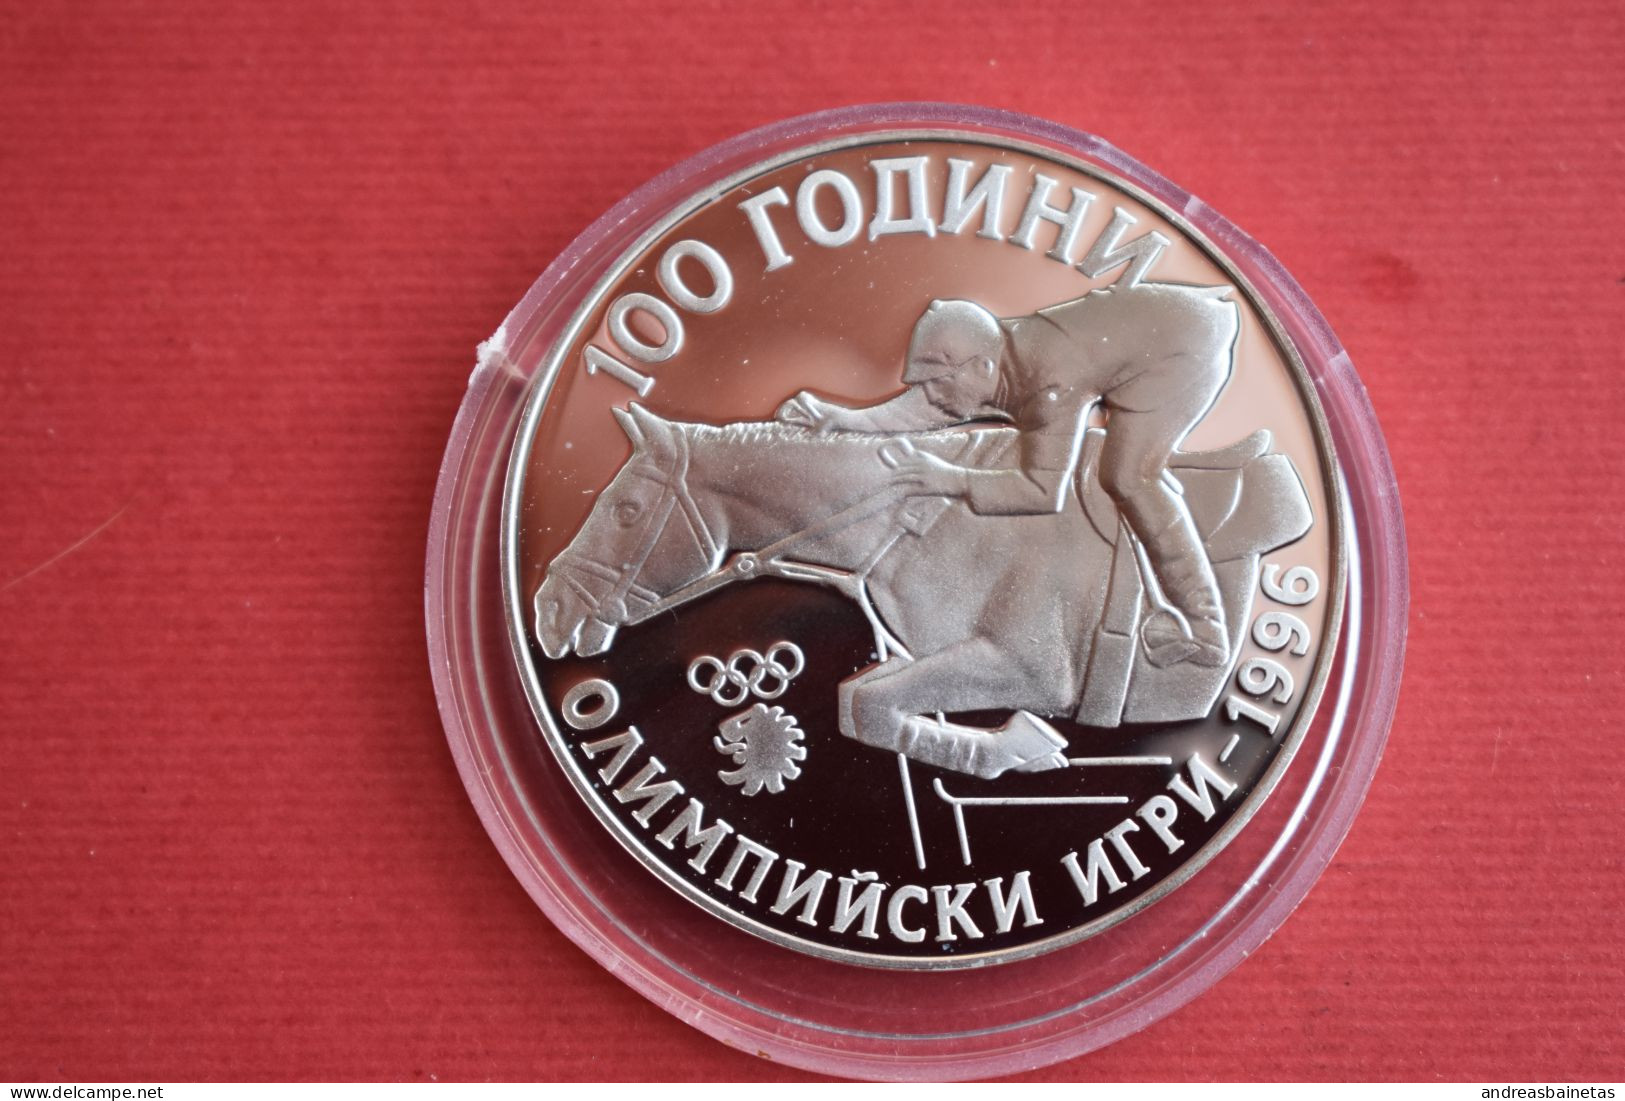 Coins Bulgaria  1000 Leva 100 Years Olympic Games 1995 KM# 215 - Bulgaria